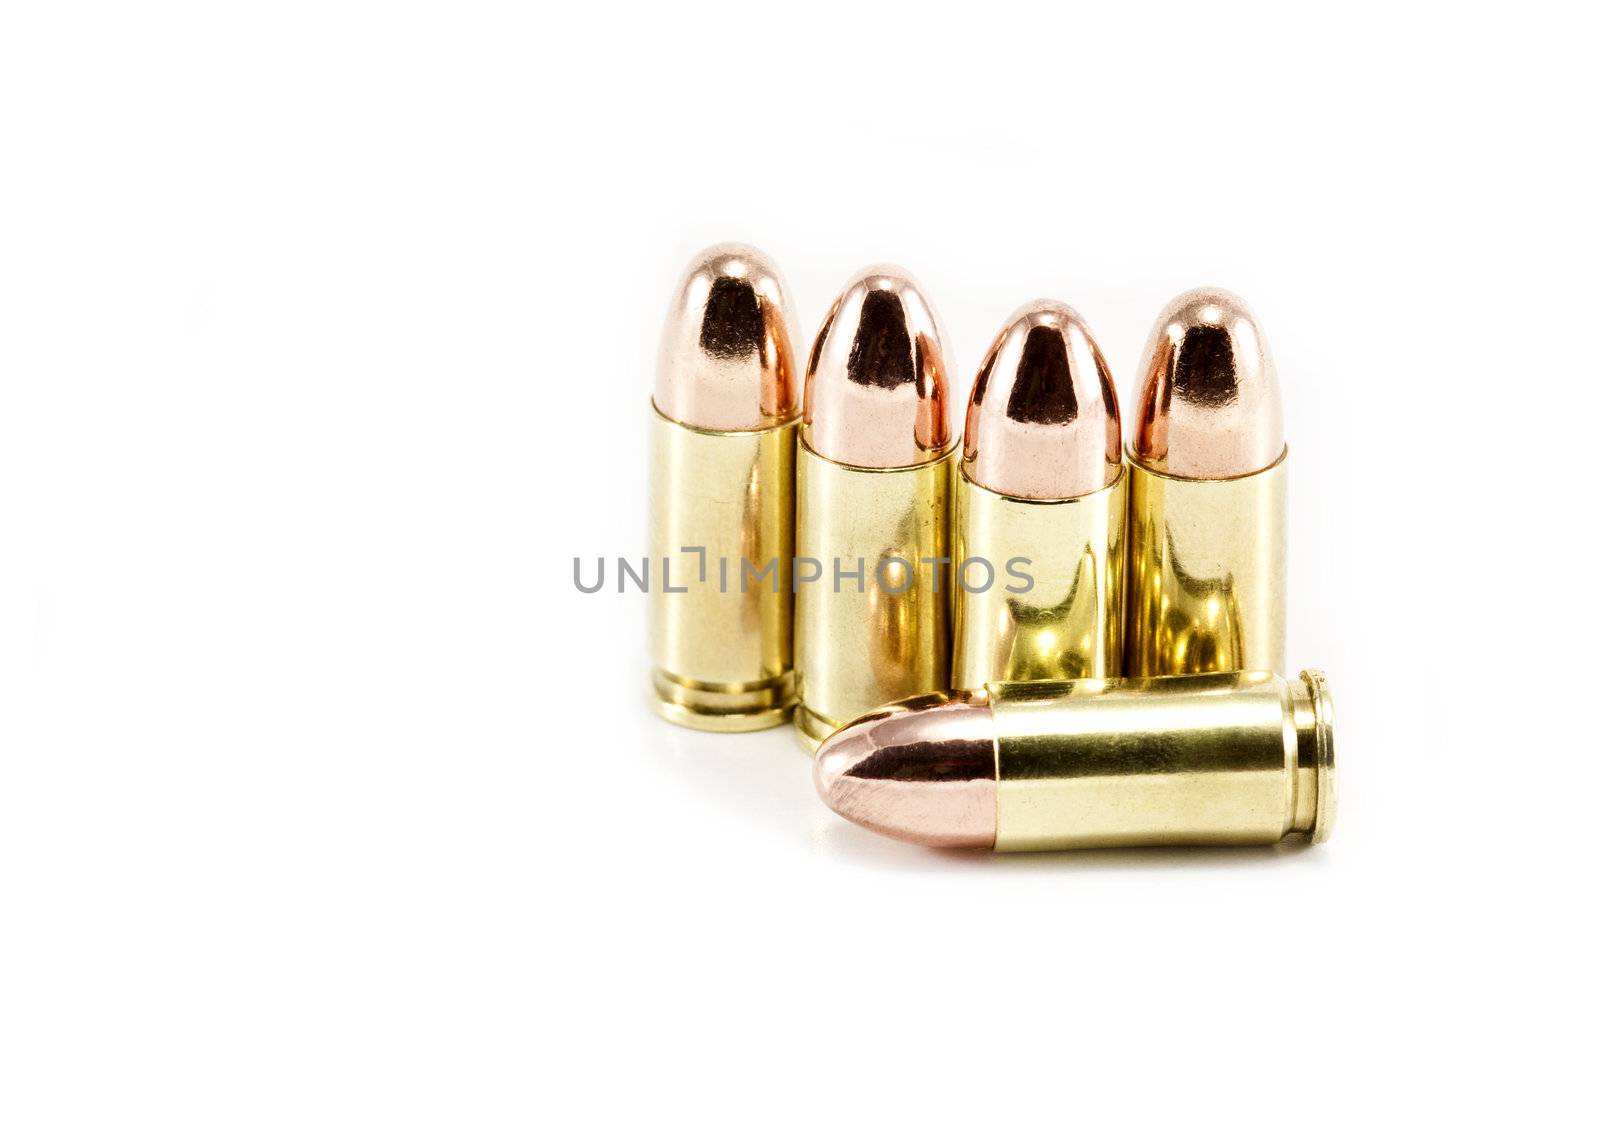 Five 9mm bullets